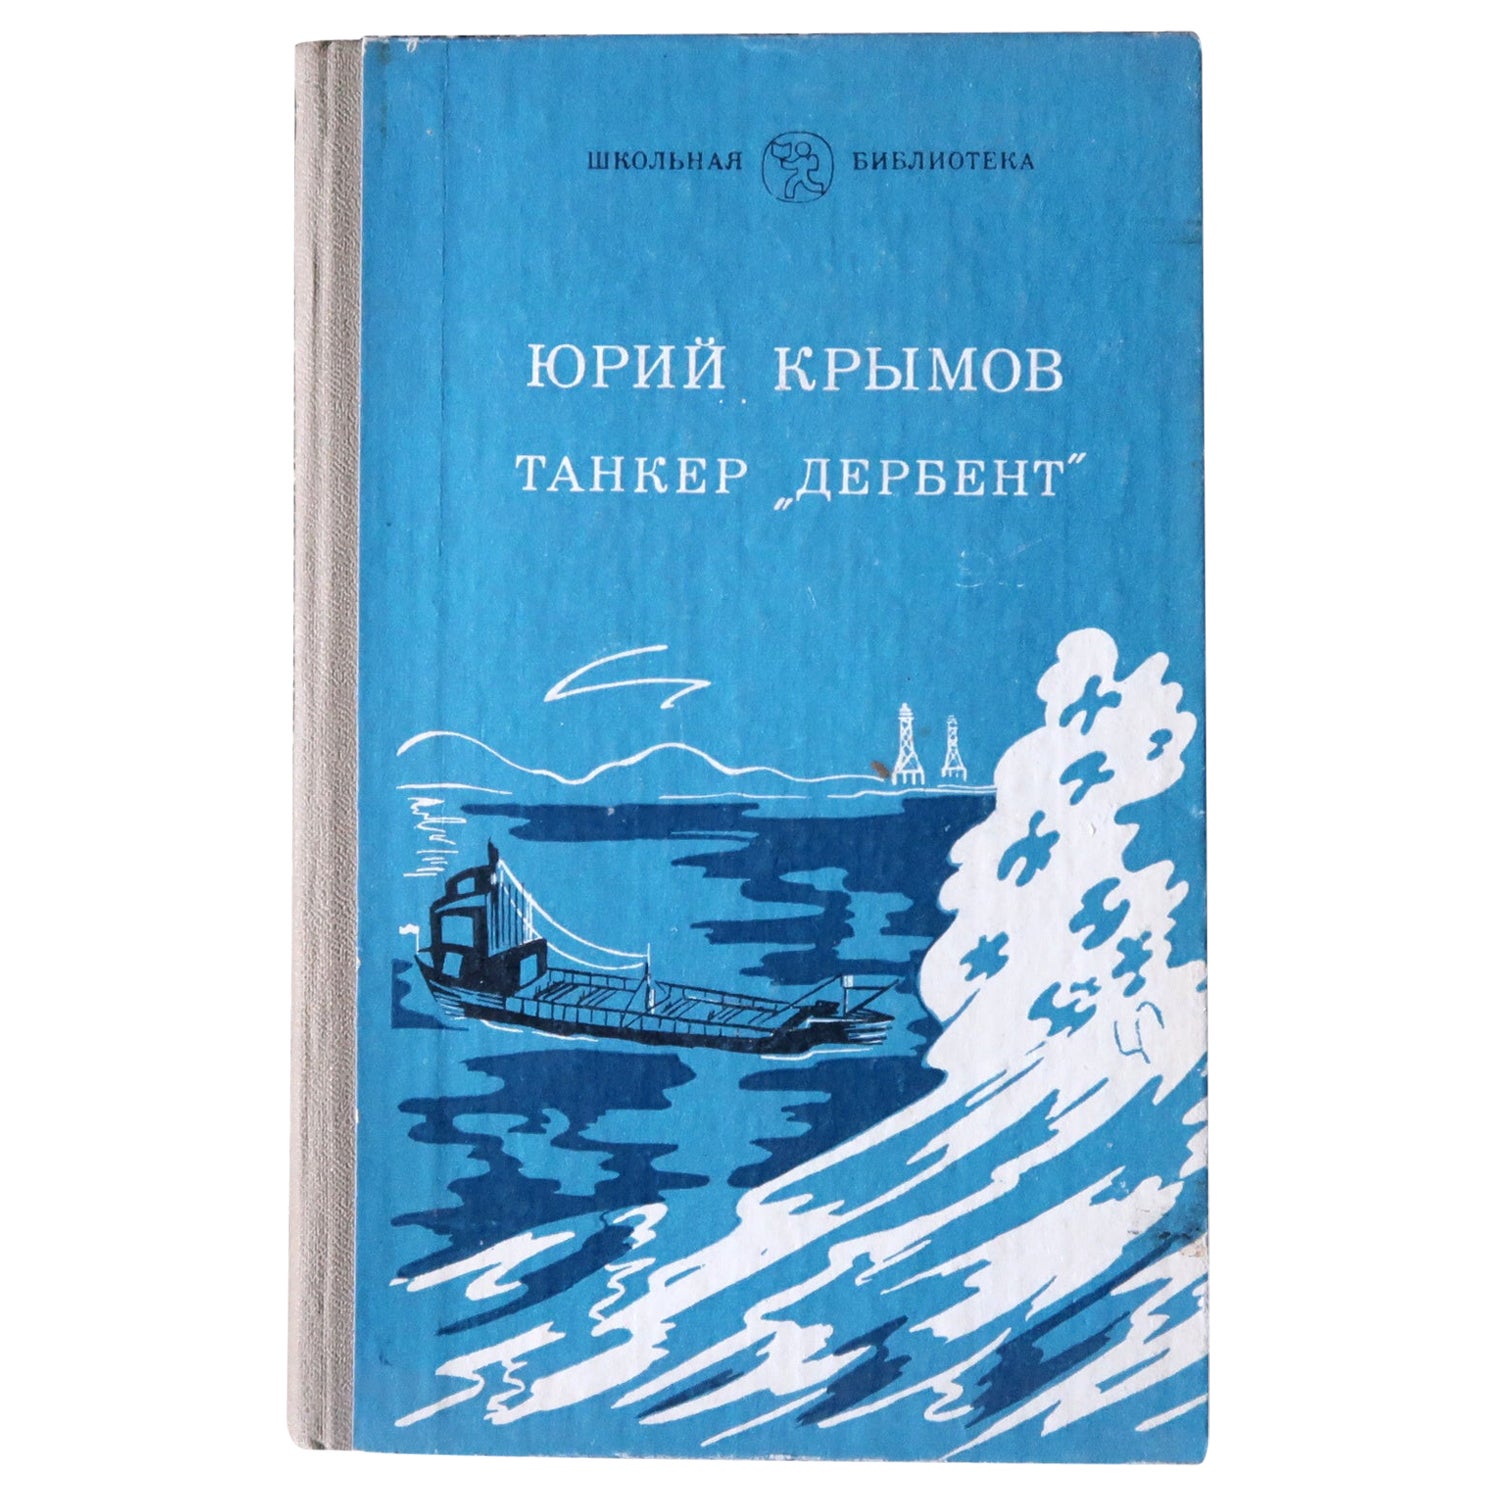 Vintage USSR Book: 'Tanker Derbent' by Yuri Krymov - A Maritime Tale, 1J115 For Sale